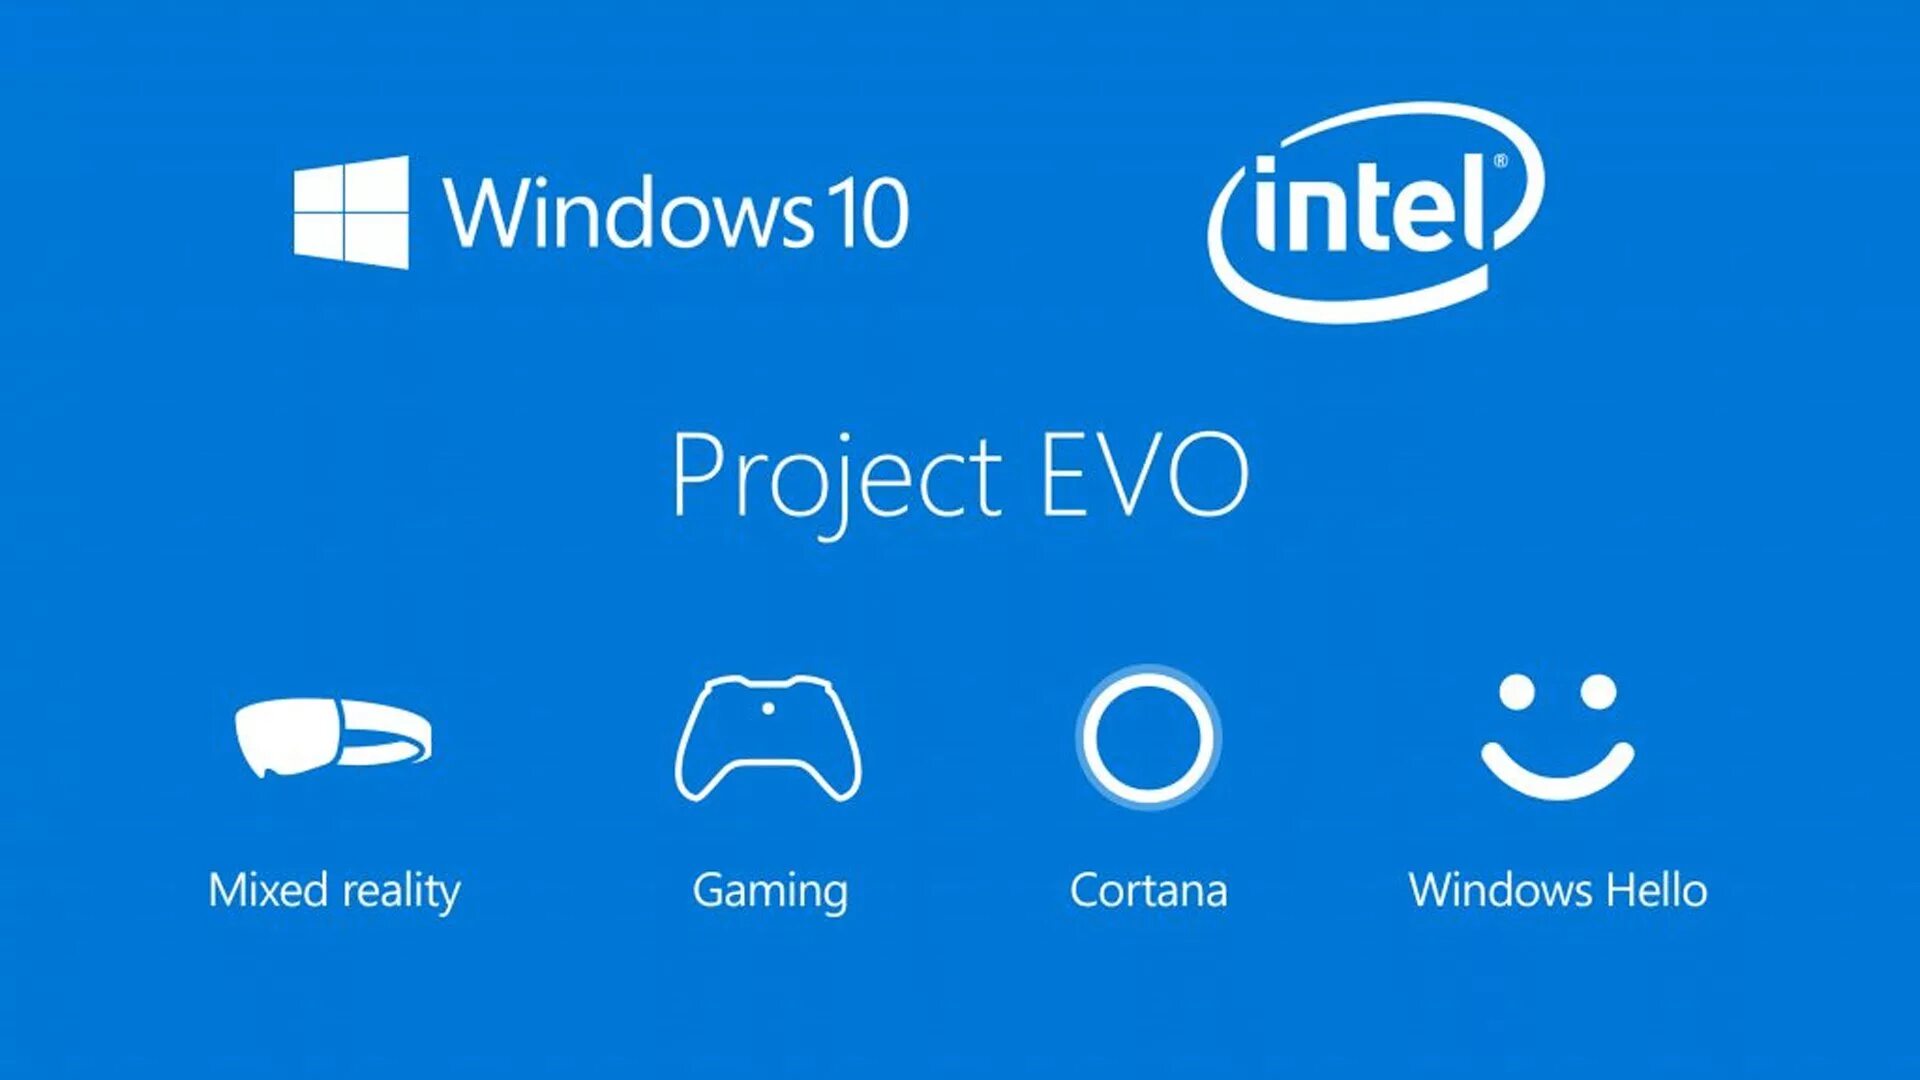 Intel programs. Project EVO. Windows Project. Intel Microsoft. Project EVO image.